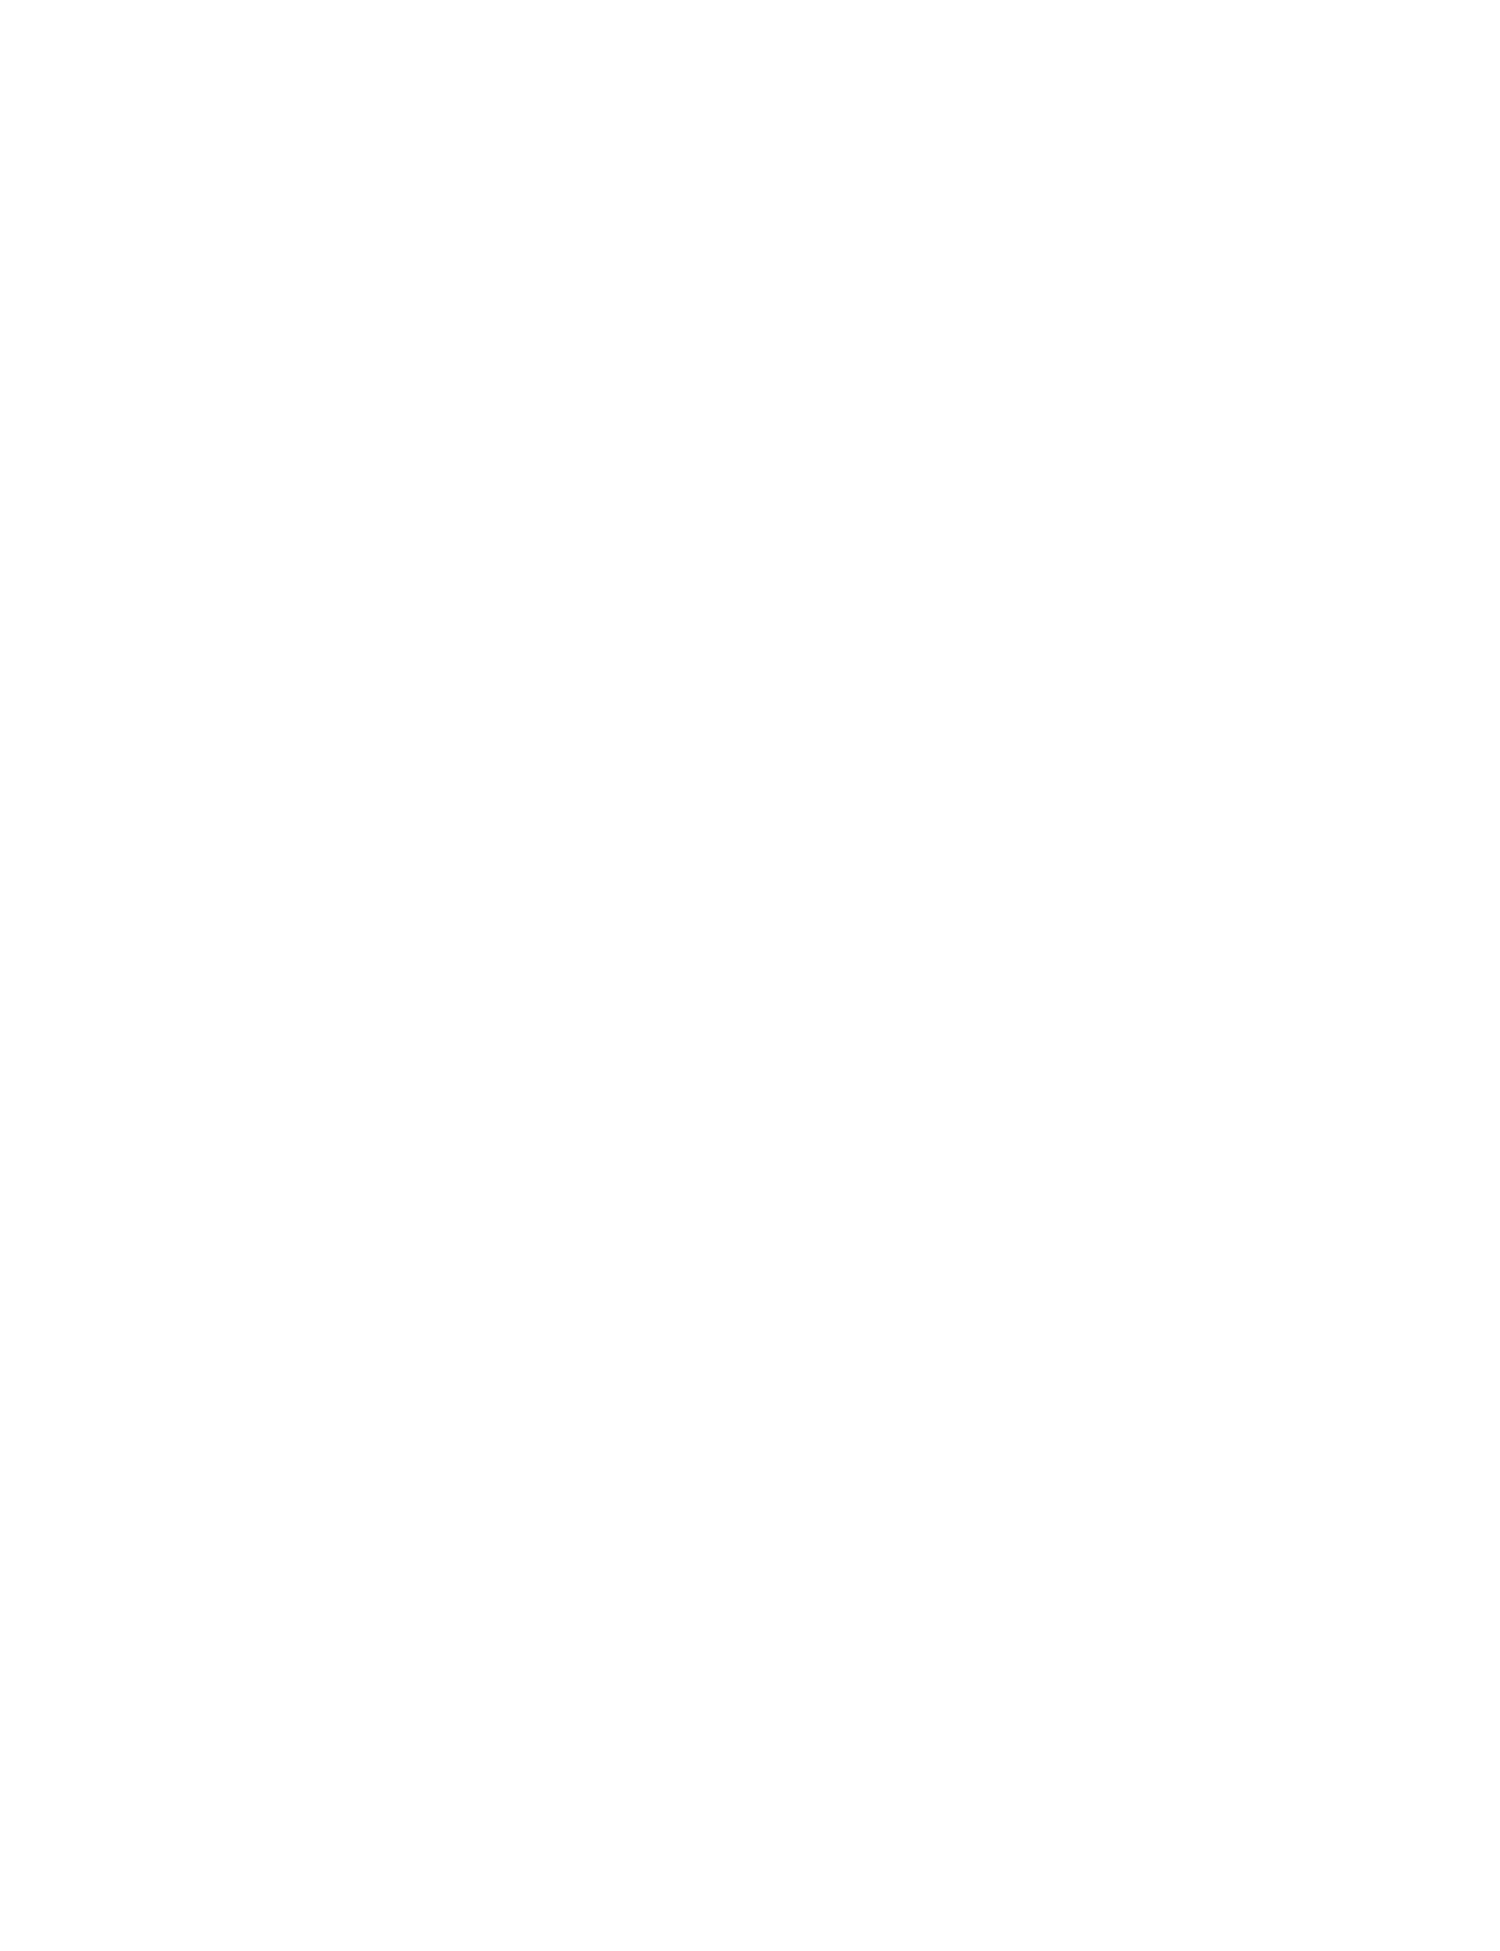 Howell Design Group